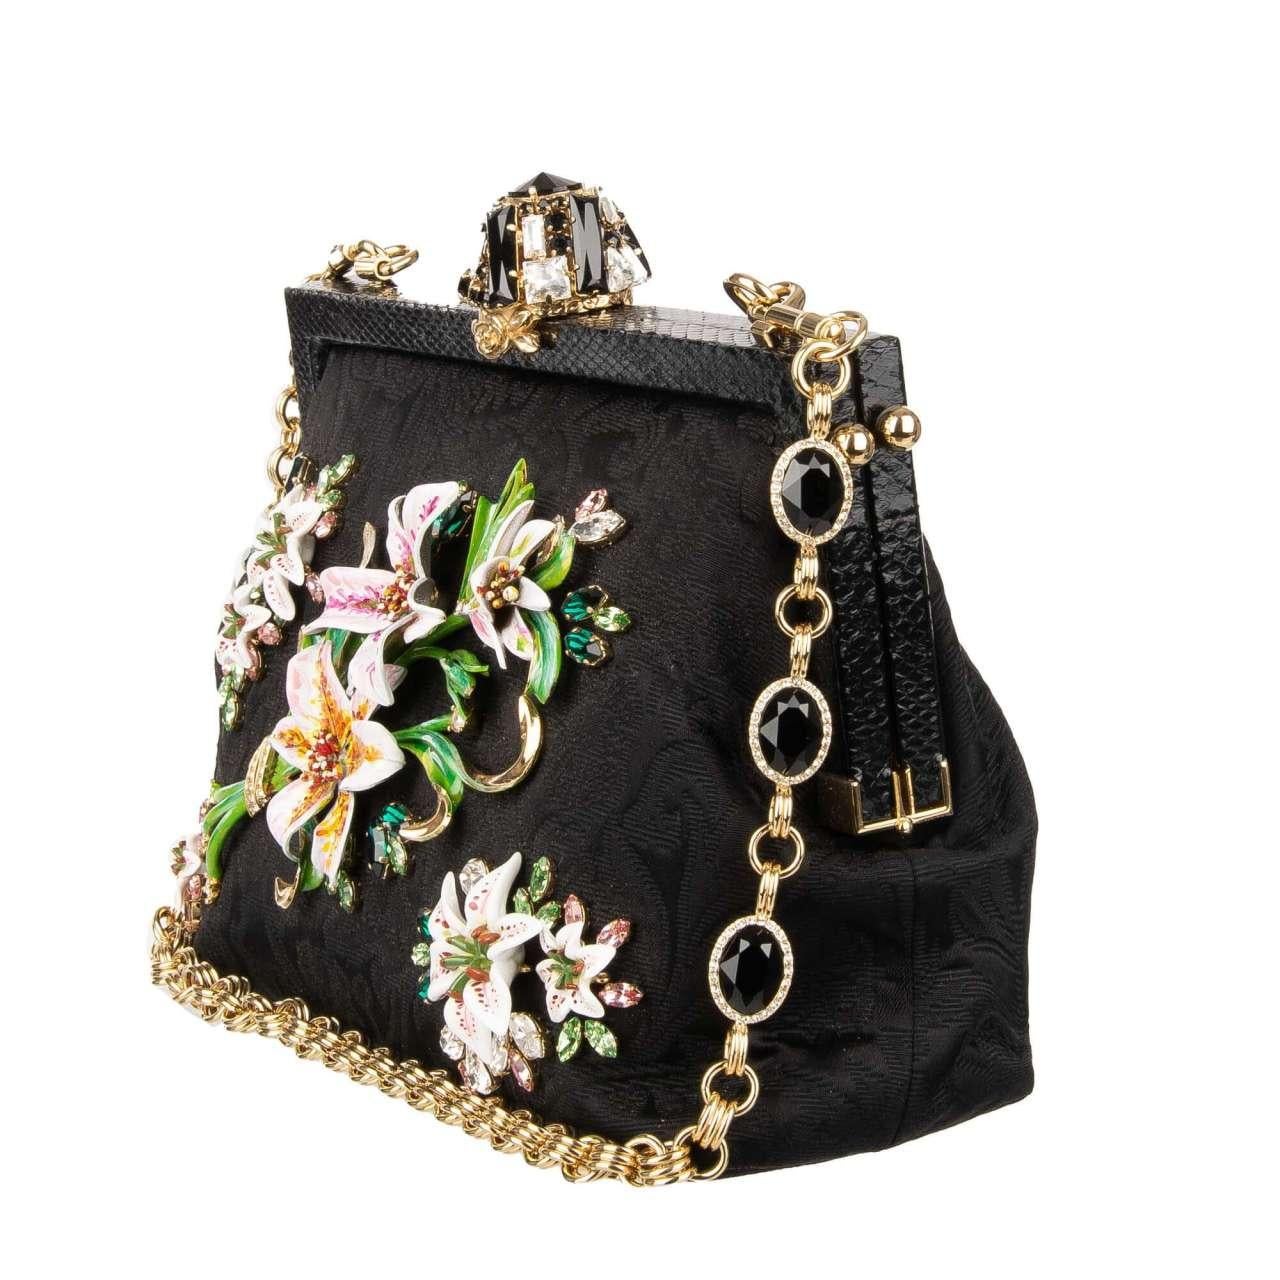 D&G - Lily Brocade Crystal Chain Snakeskin Evening Clutch Bag VANDA Black For Sale 1